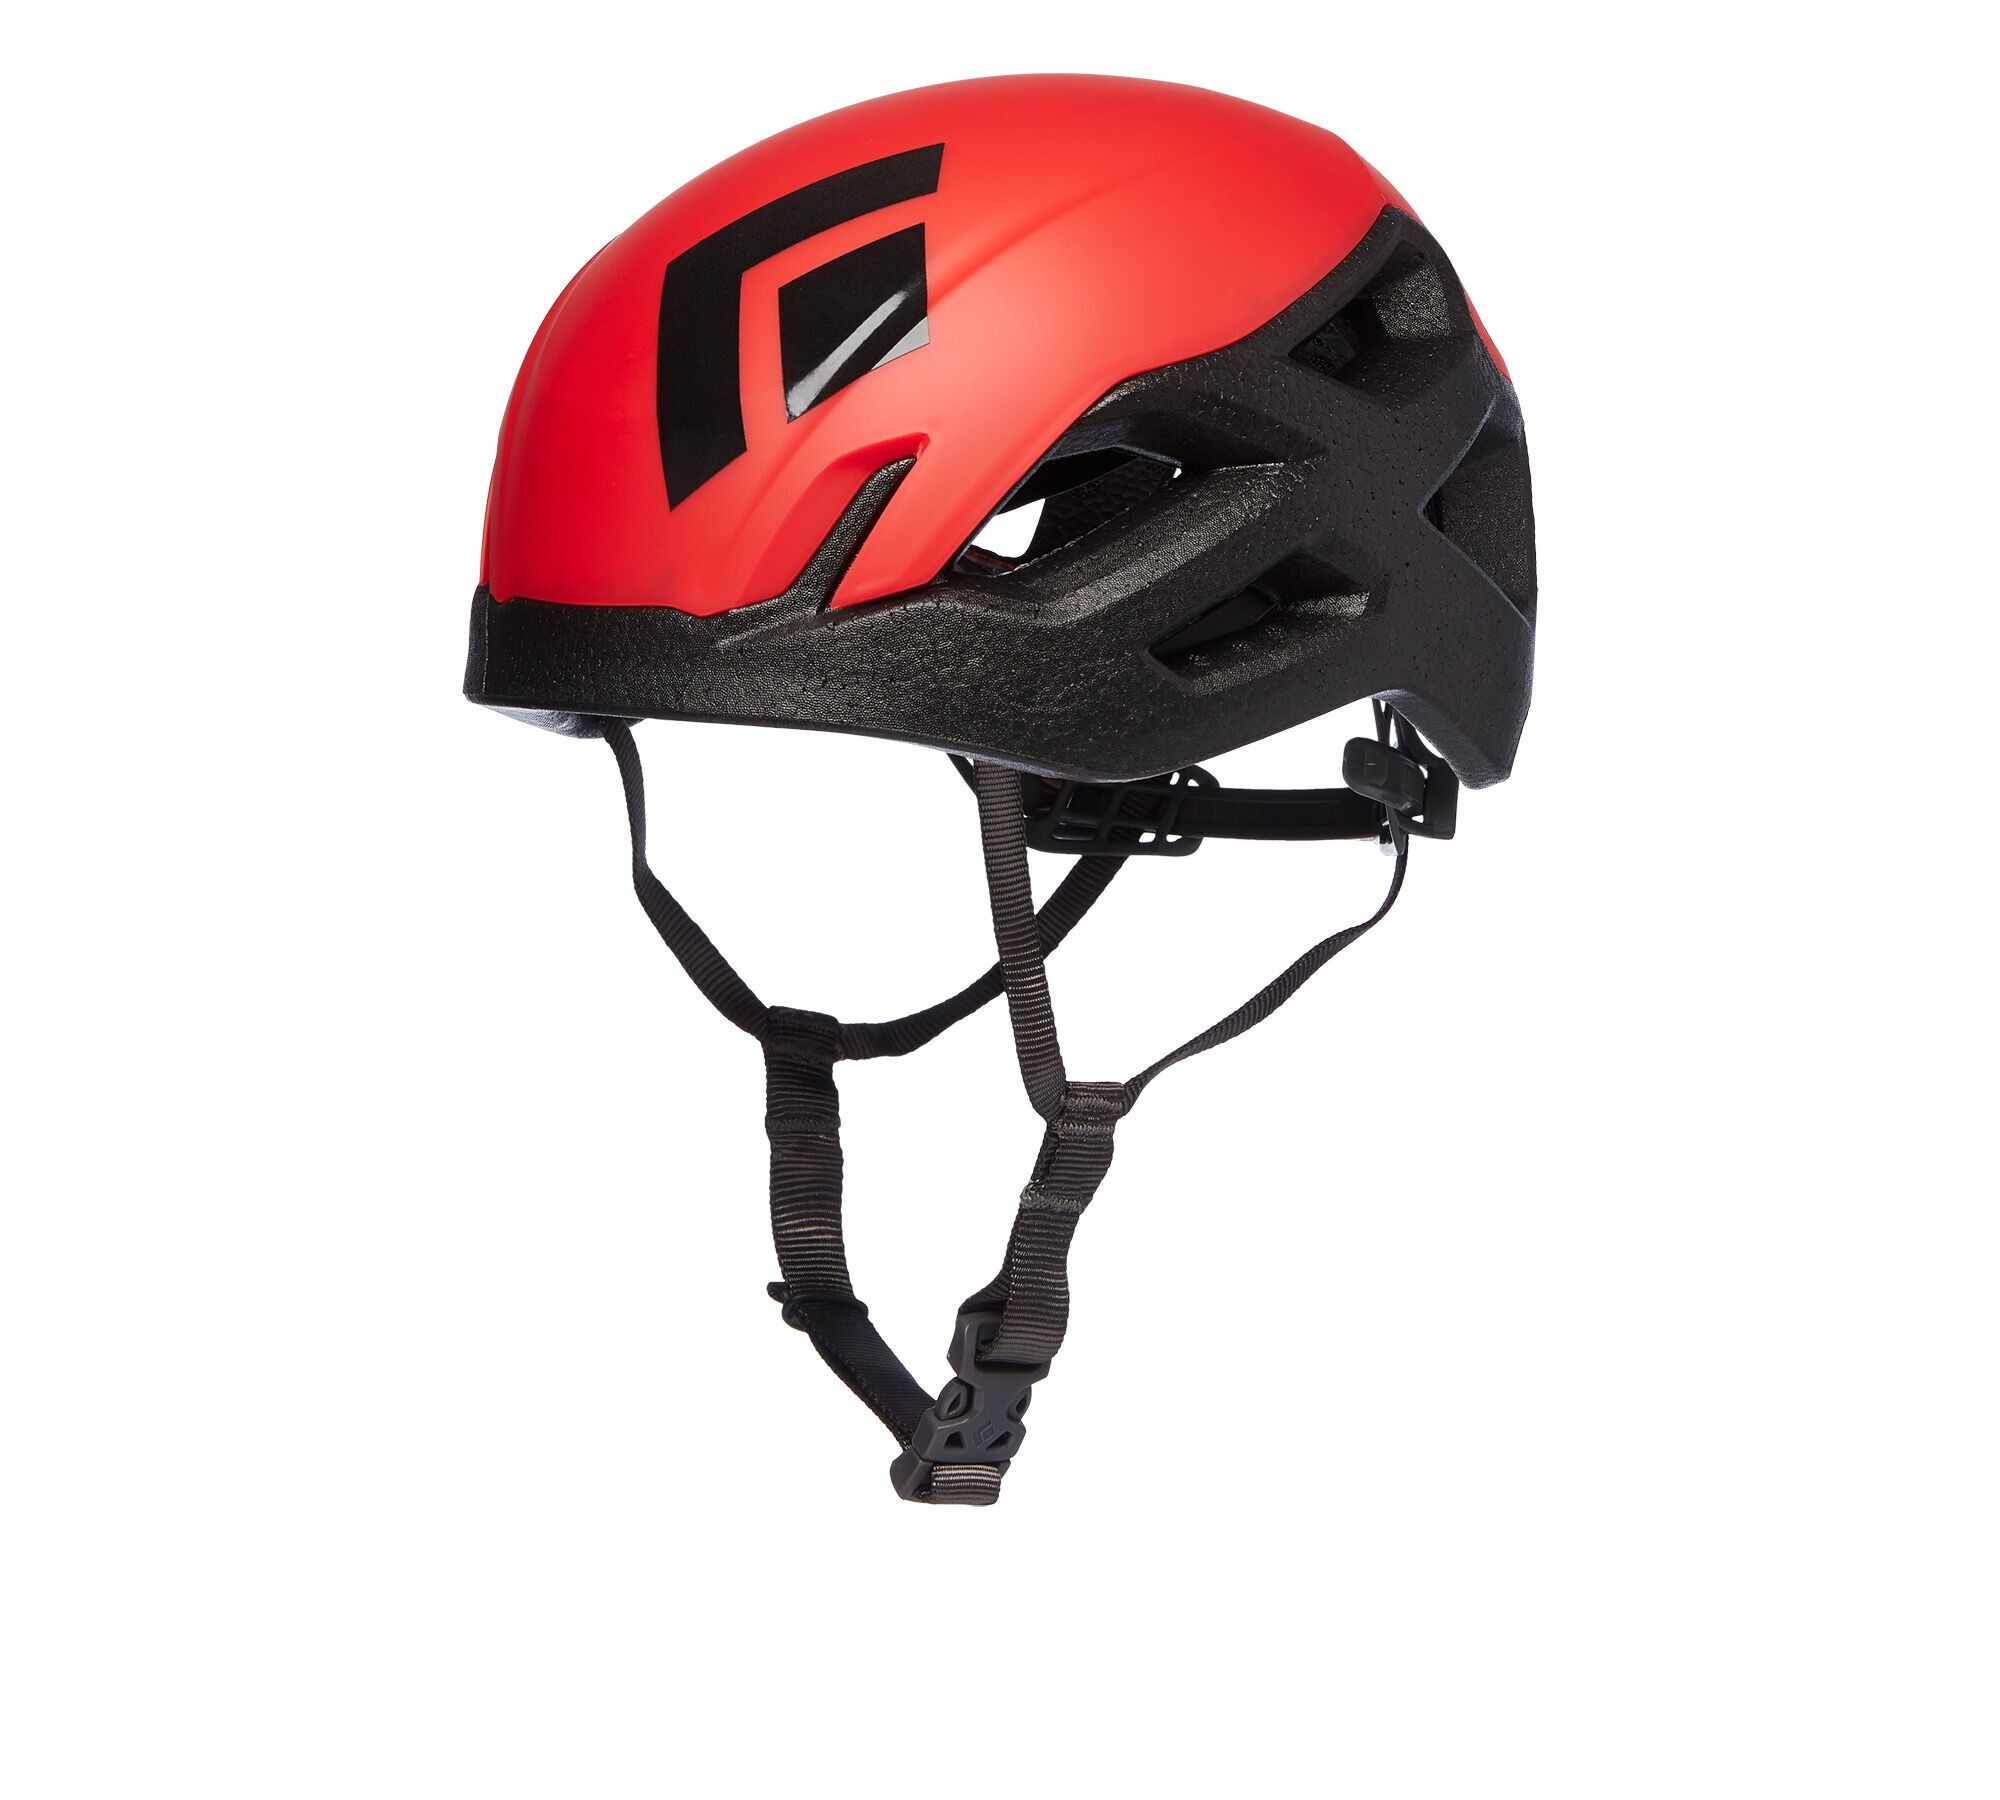 Black Diamond Vision Helmet - Climbing helmet